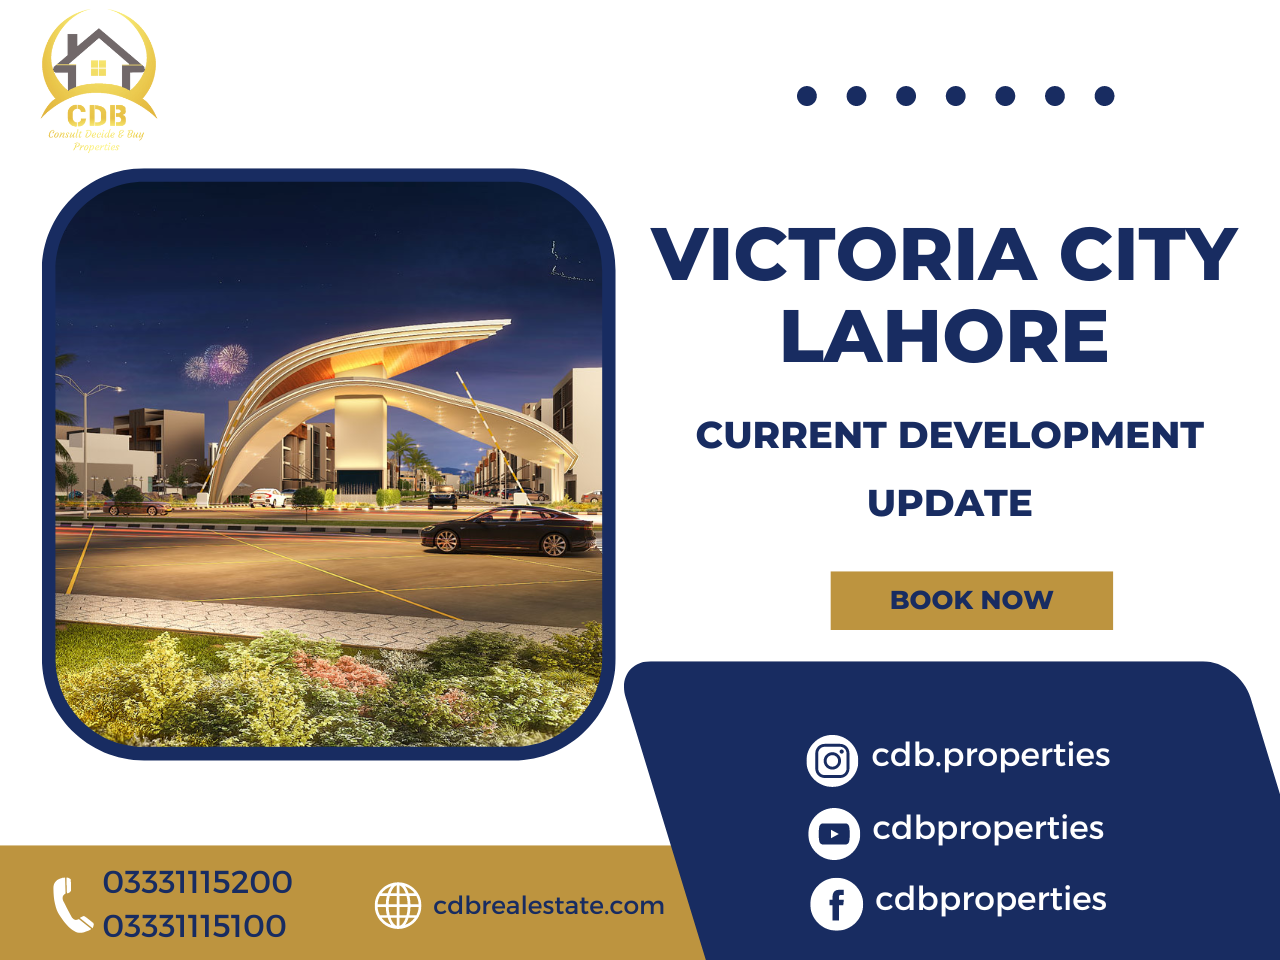 Victoria City Lahore current development update